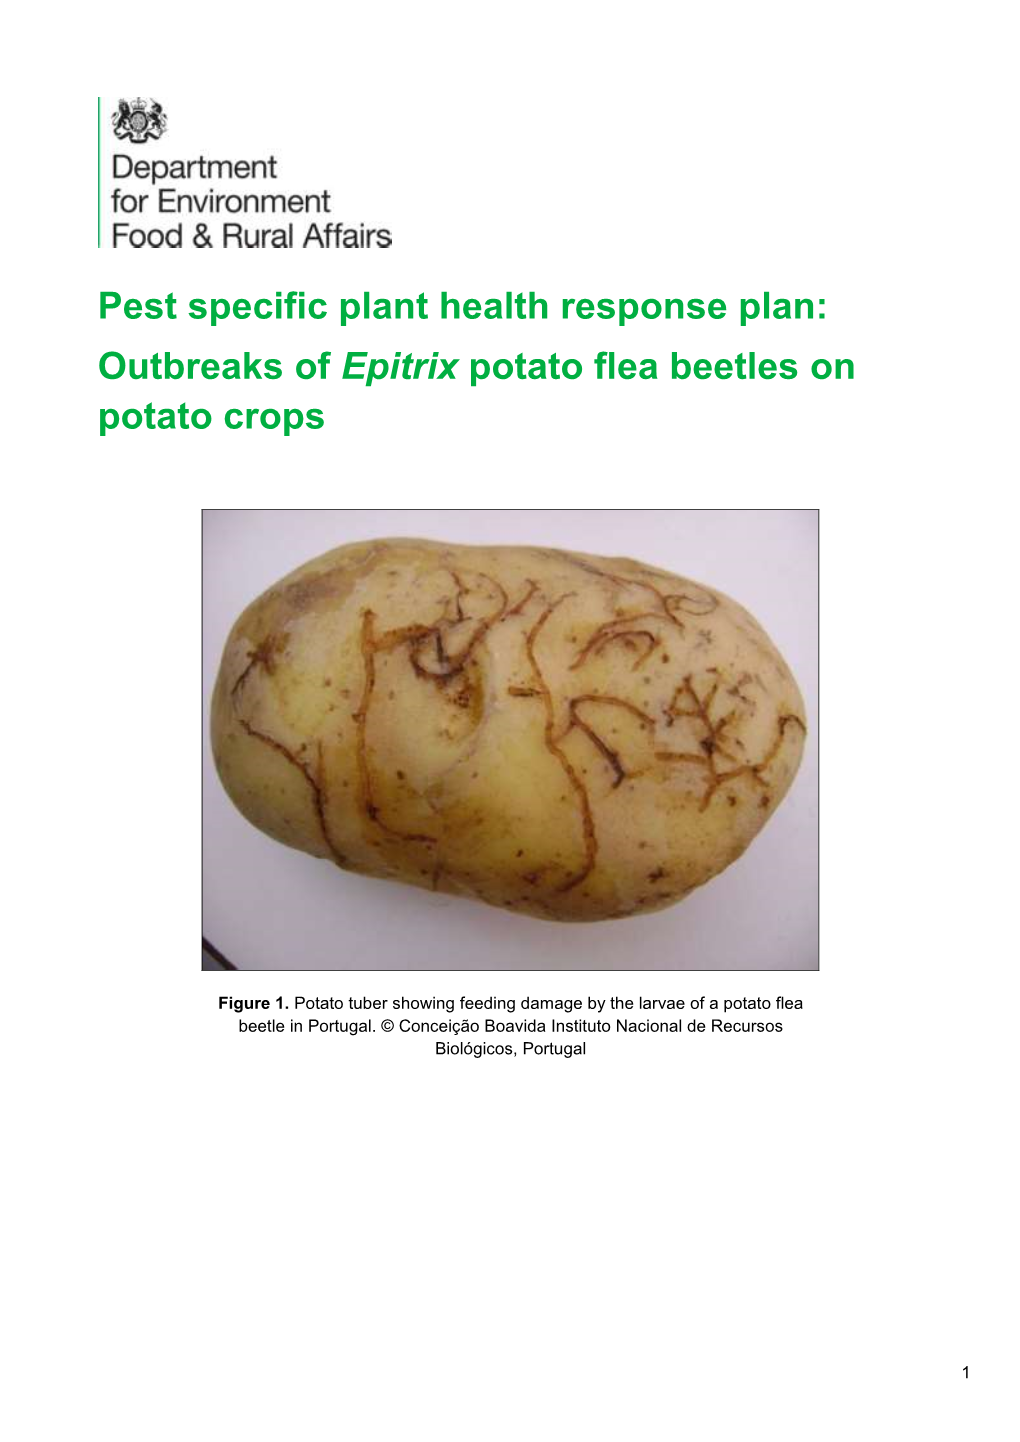 Pest Specific Plant Health Response Plan: Outbreaks of Epitrix Potato Flea Beetles on Potato Crops